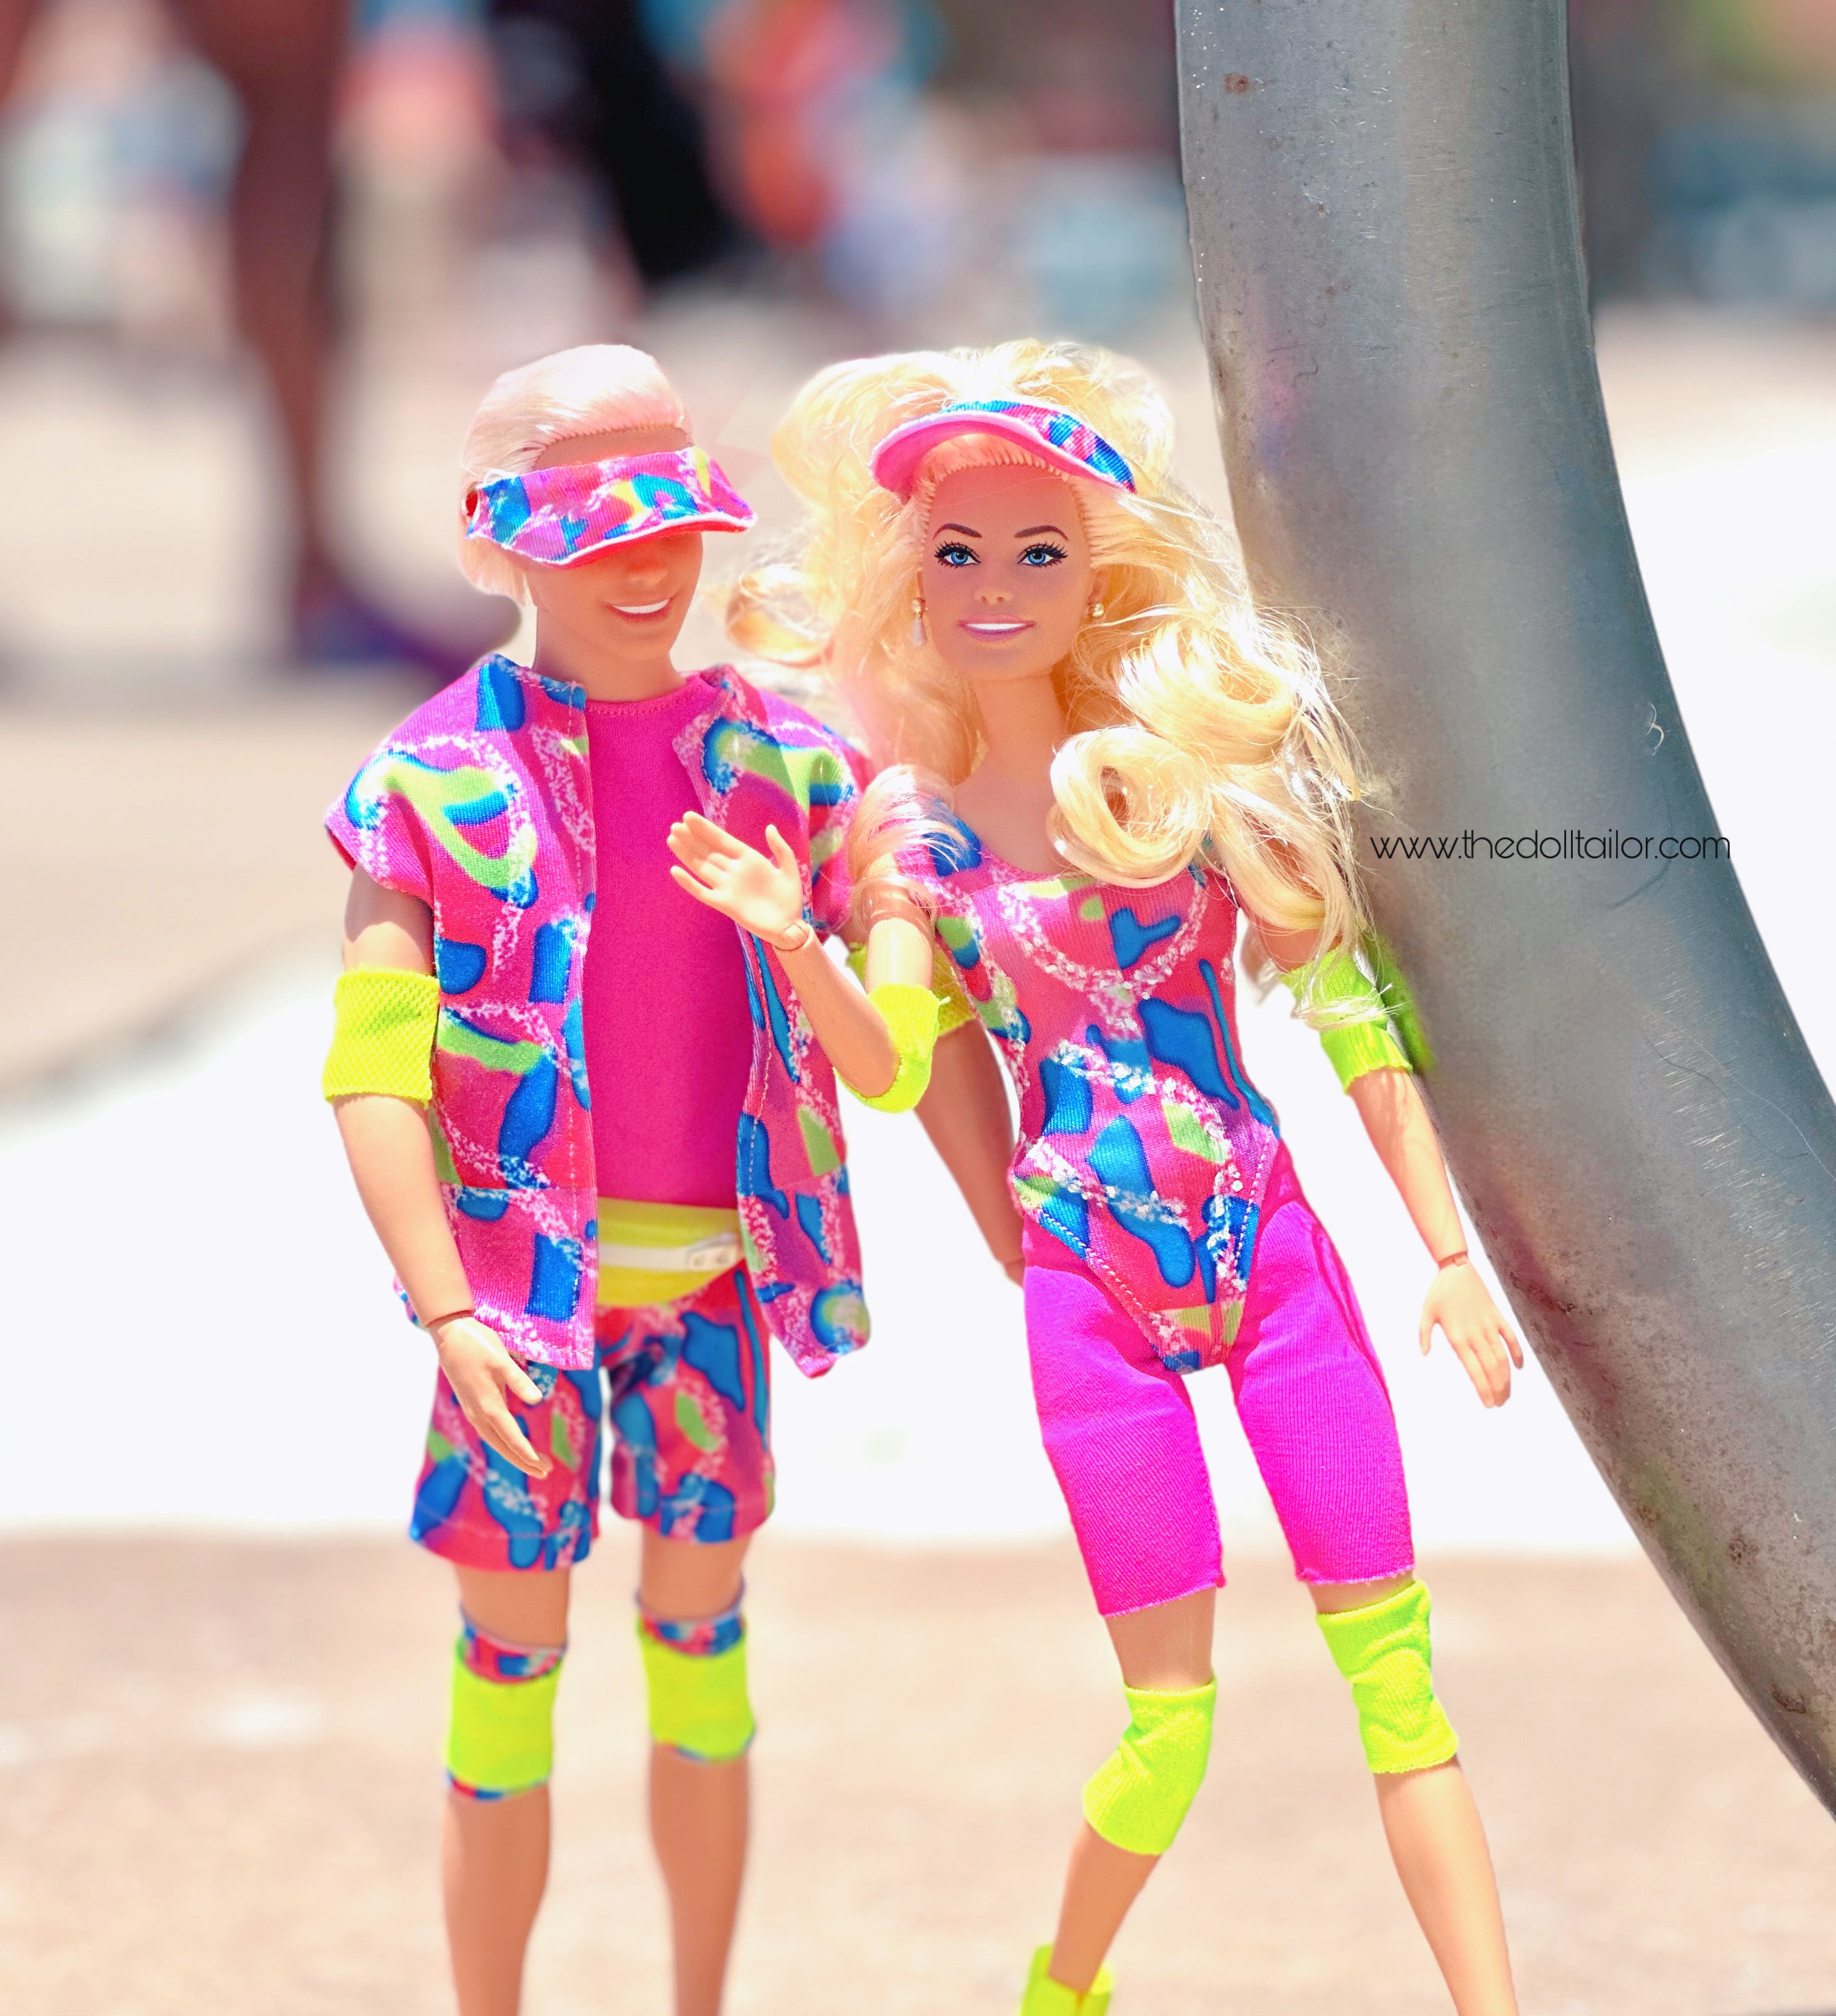 My Roller blading Ken costume : r/Barbie